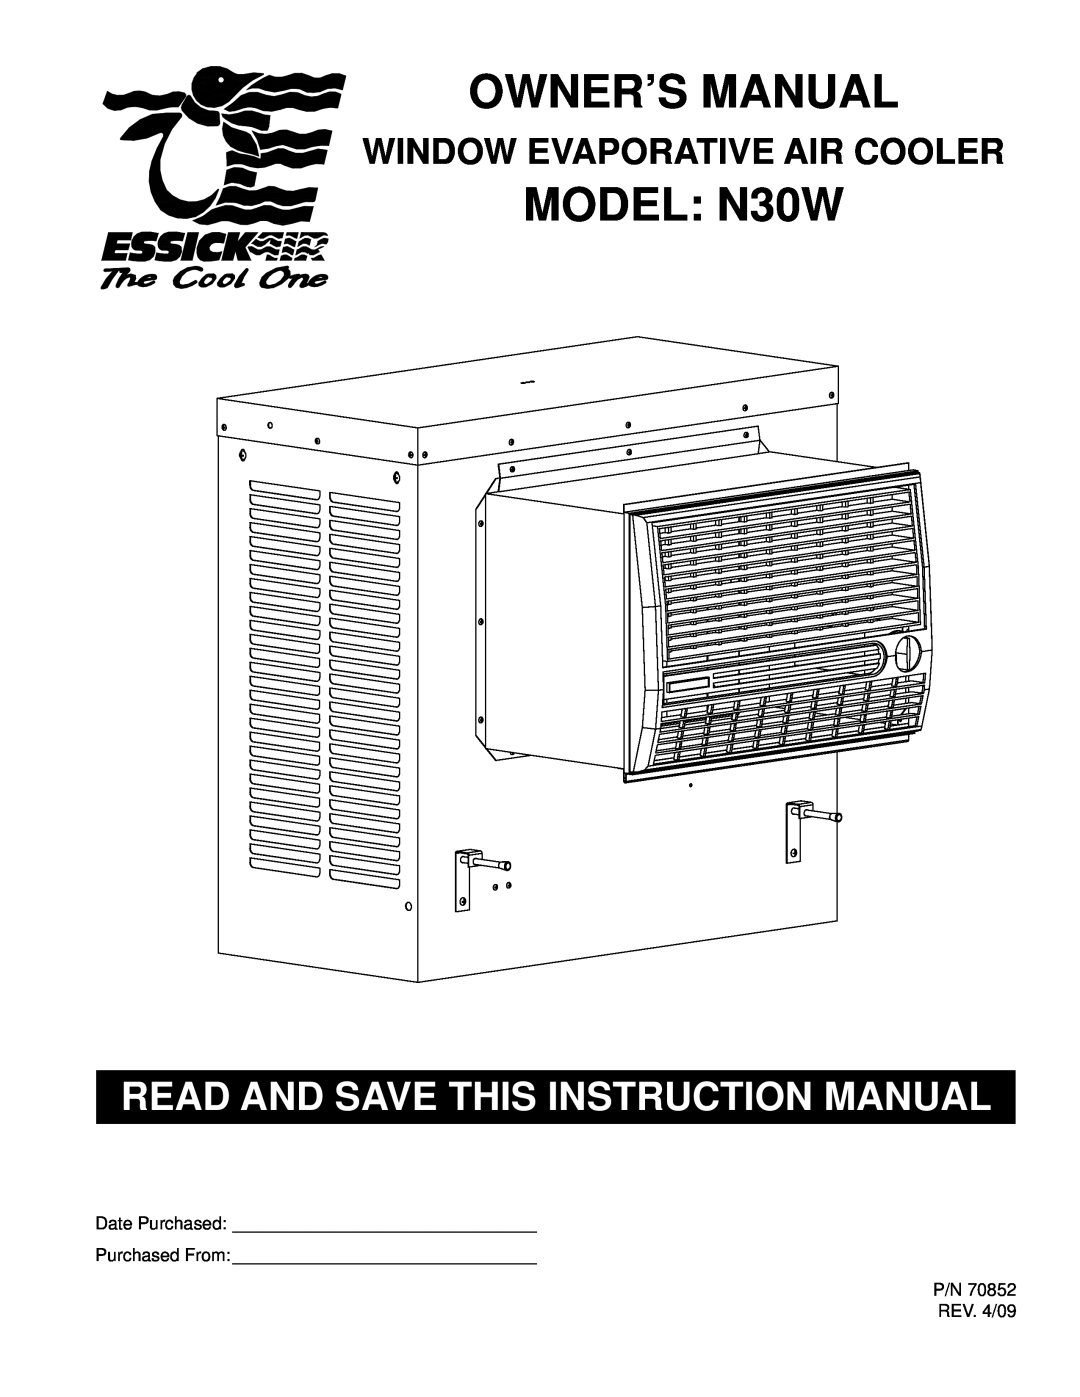 Essick Air instruction manual MODEL N30W, Window Evaporative Air Cooler 